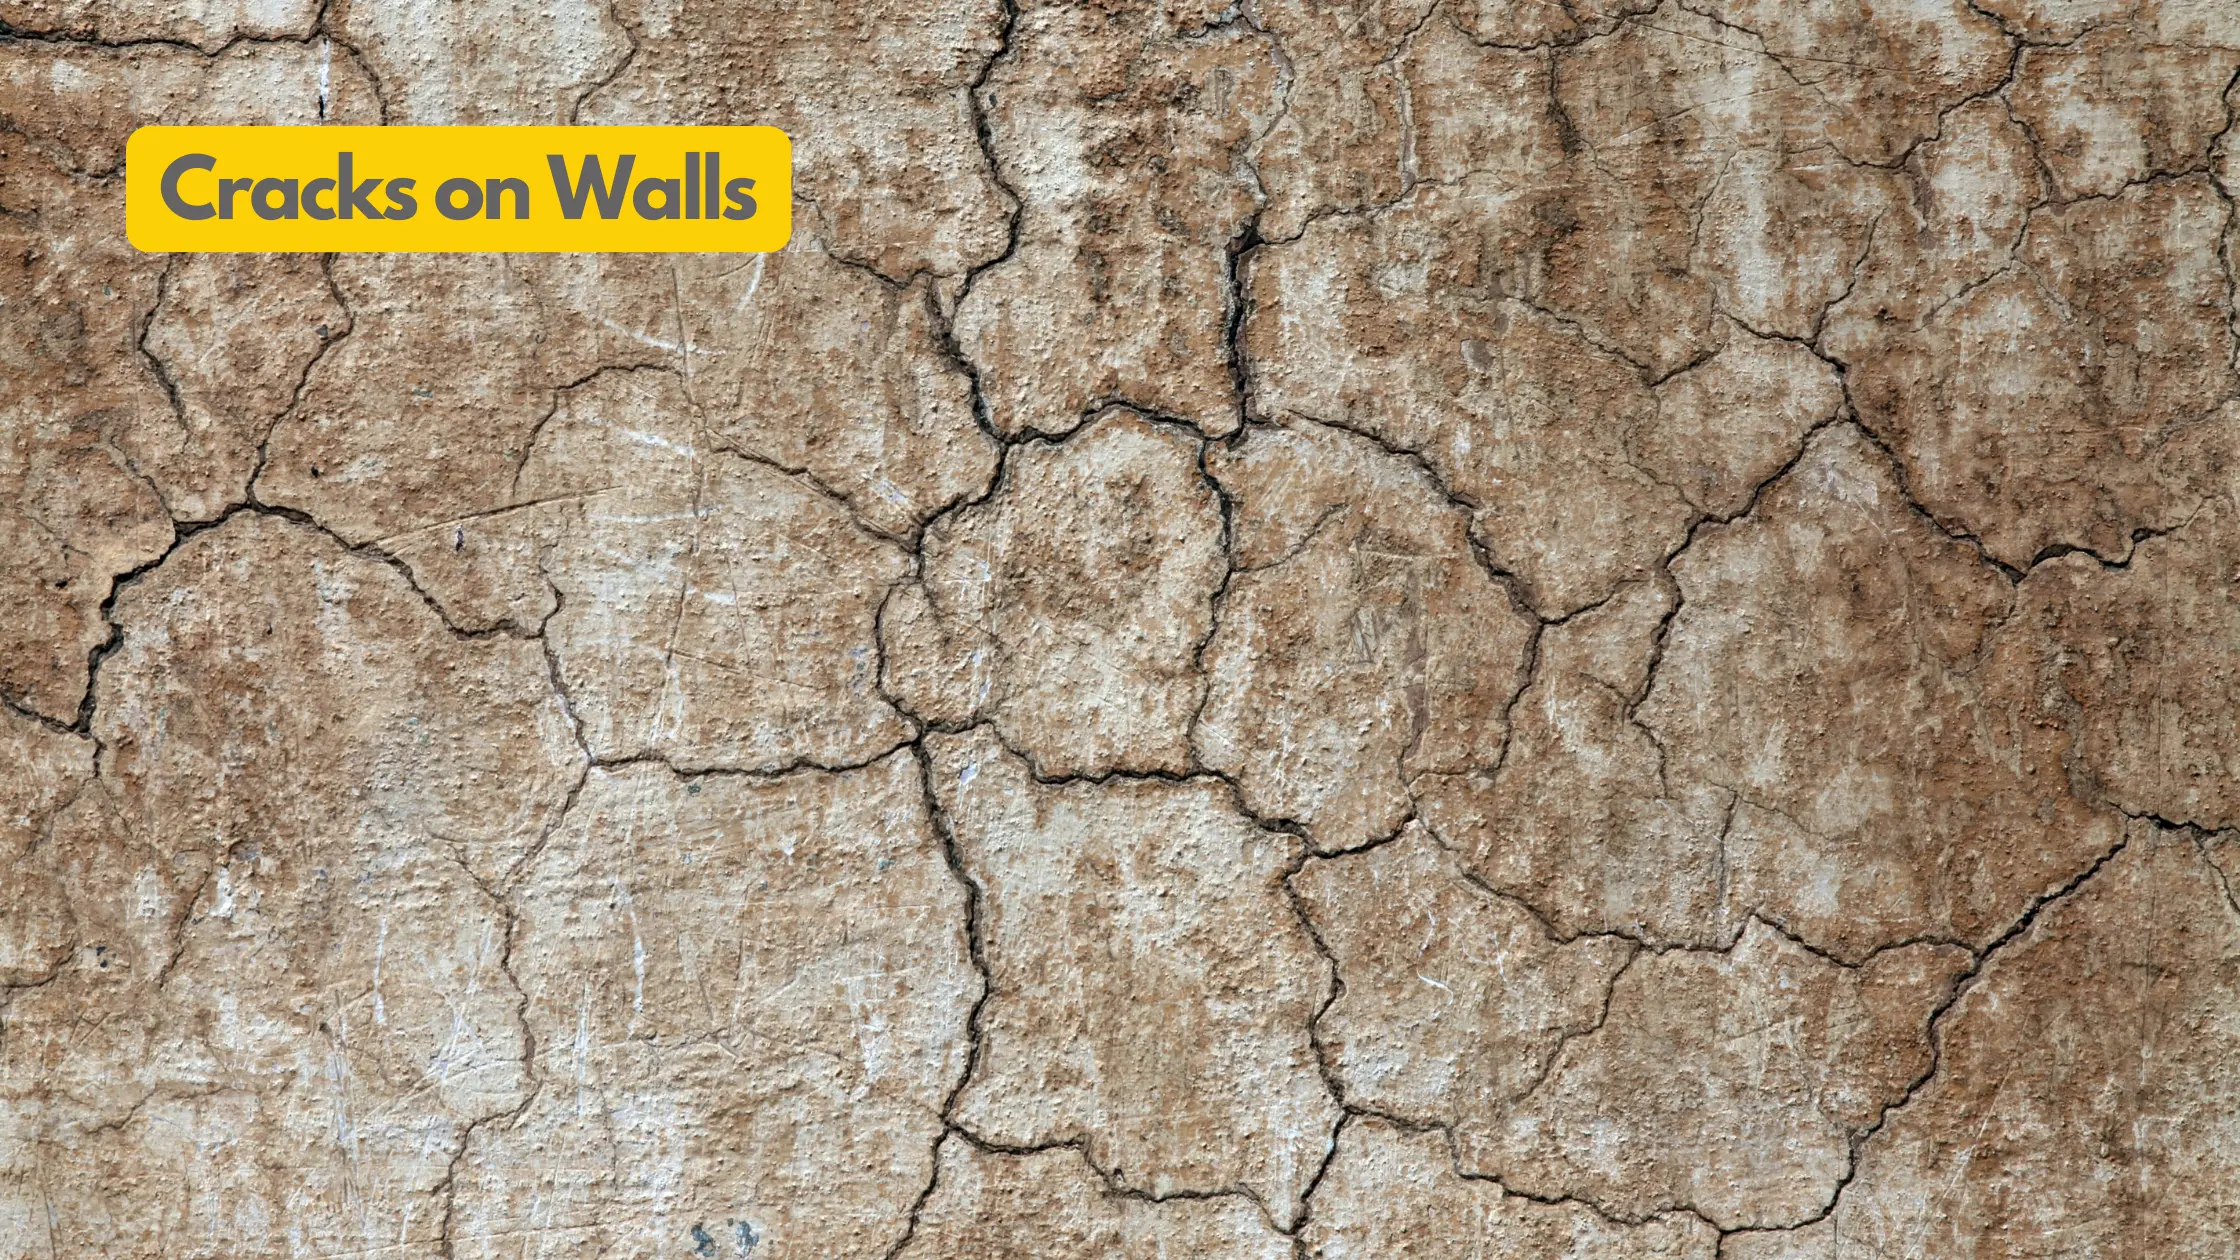 Cracks on Walls